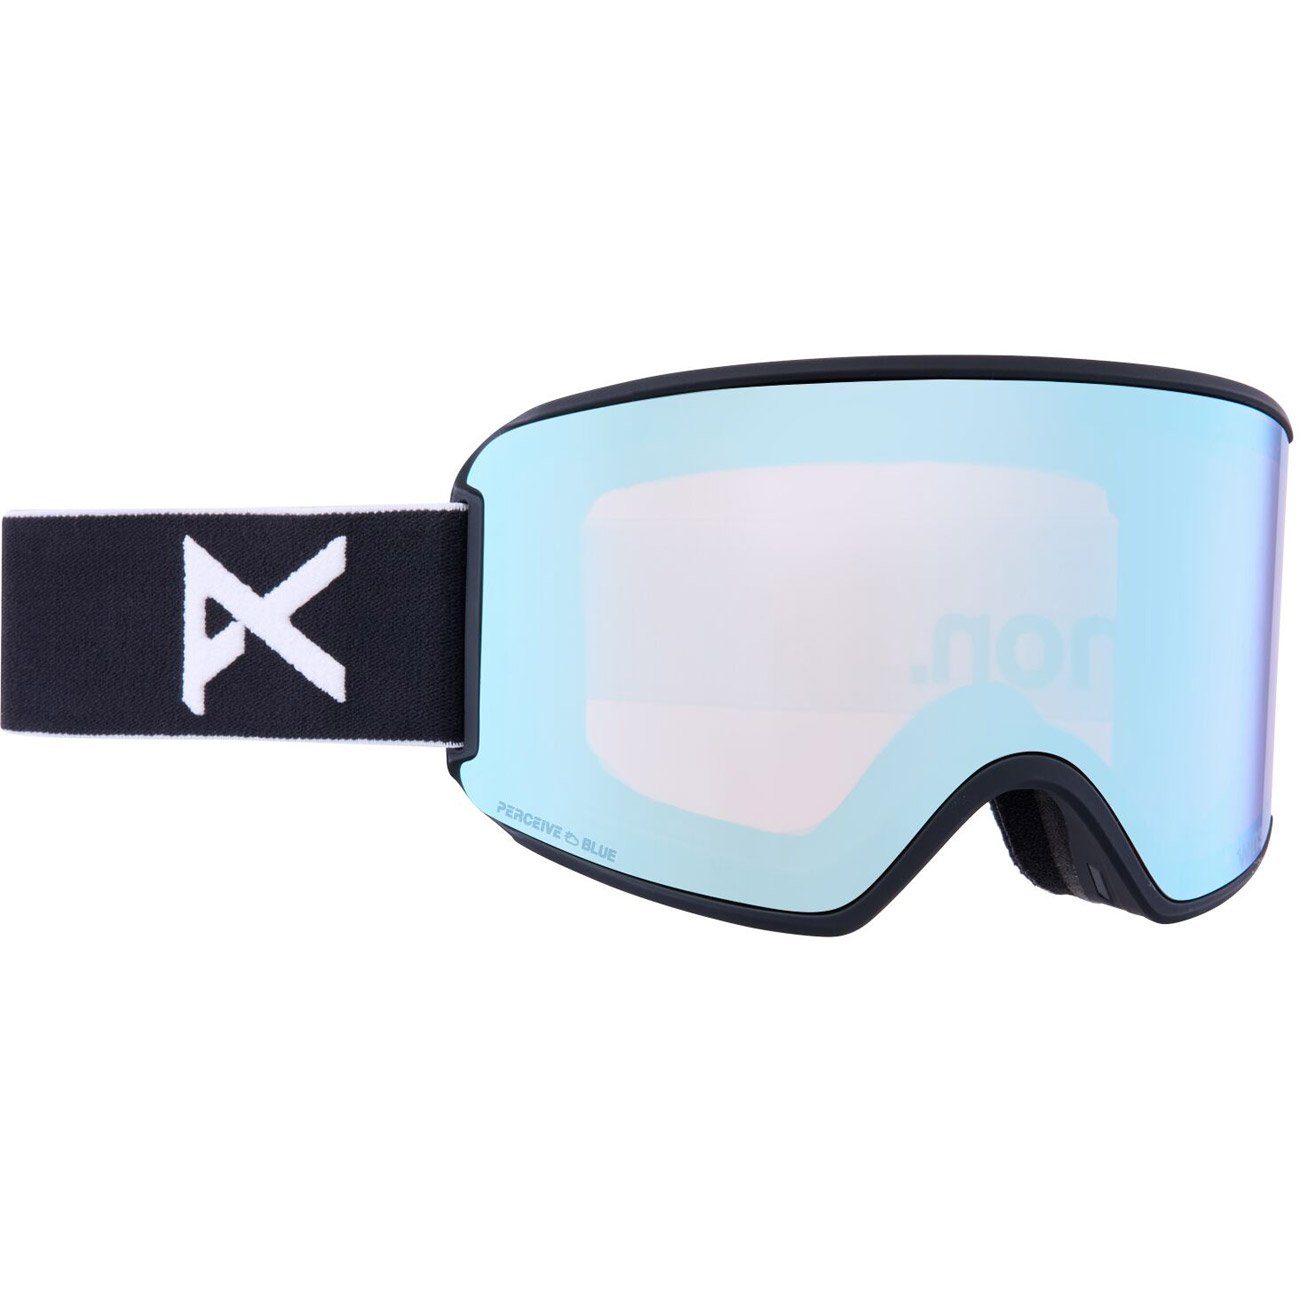 Snowboardbrille, WM3 Anon LINSE vrbl black/prcv blue MFI + BONUS